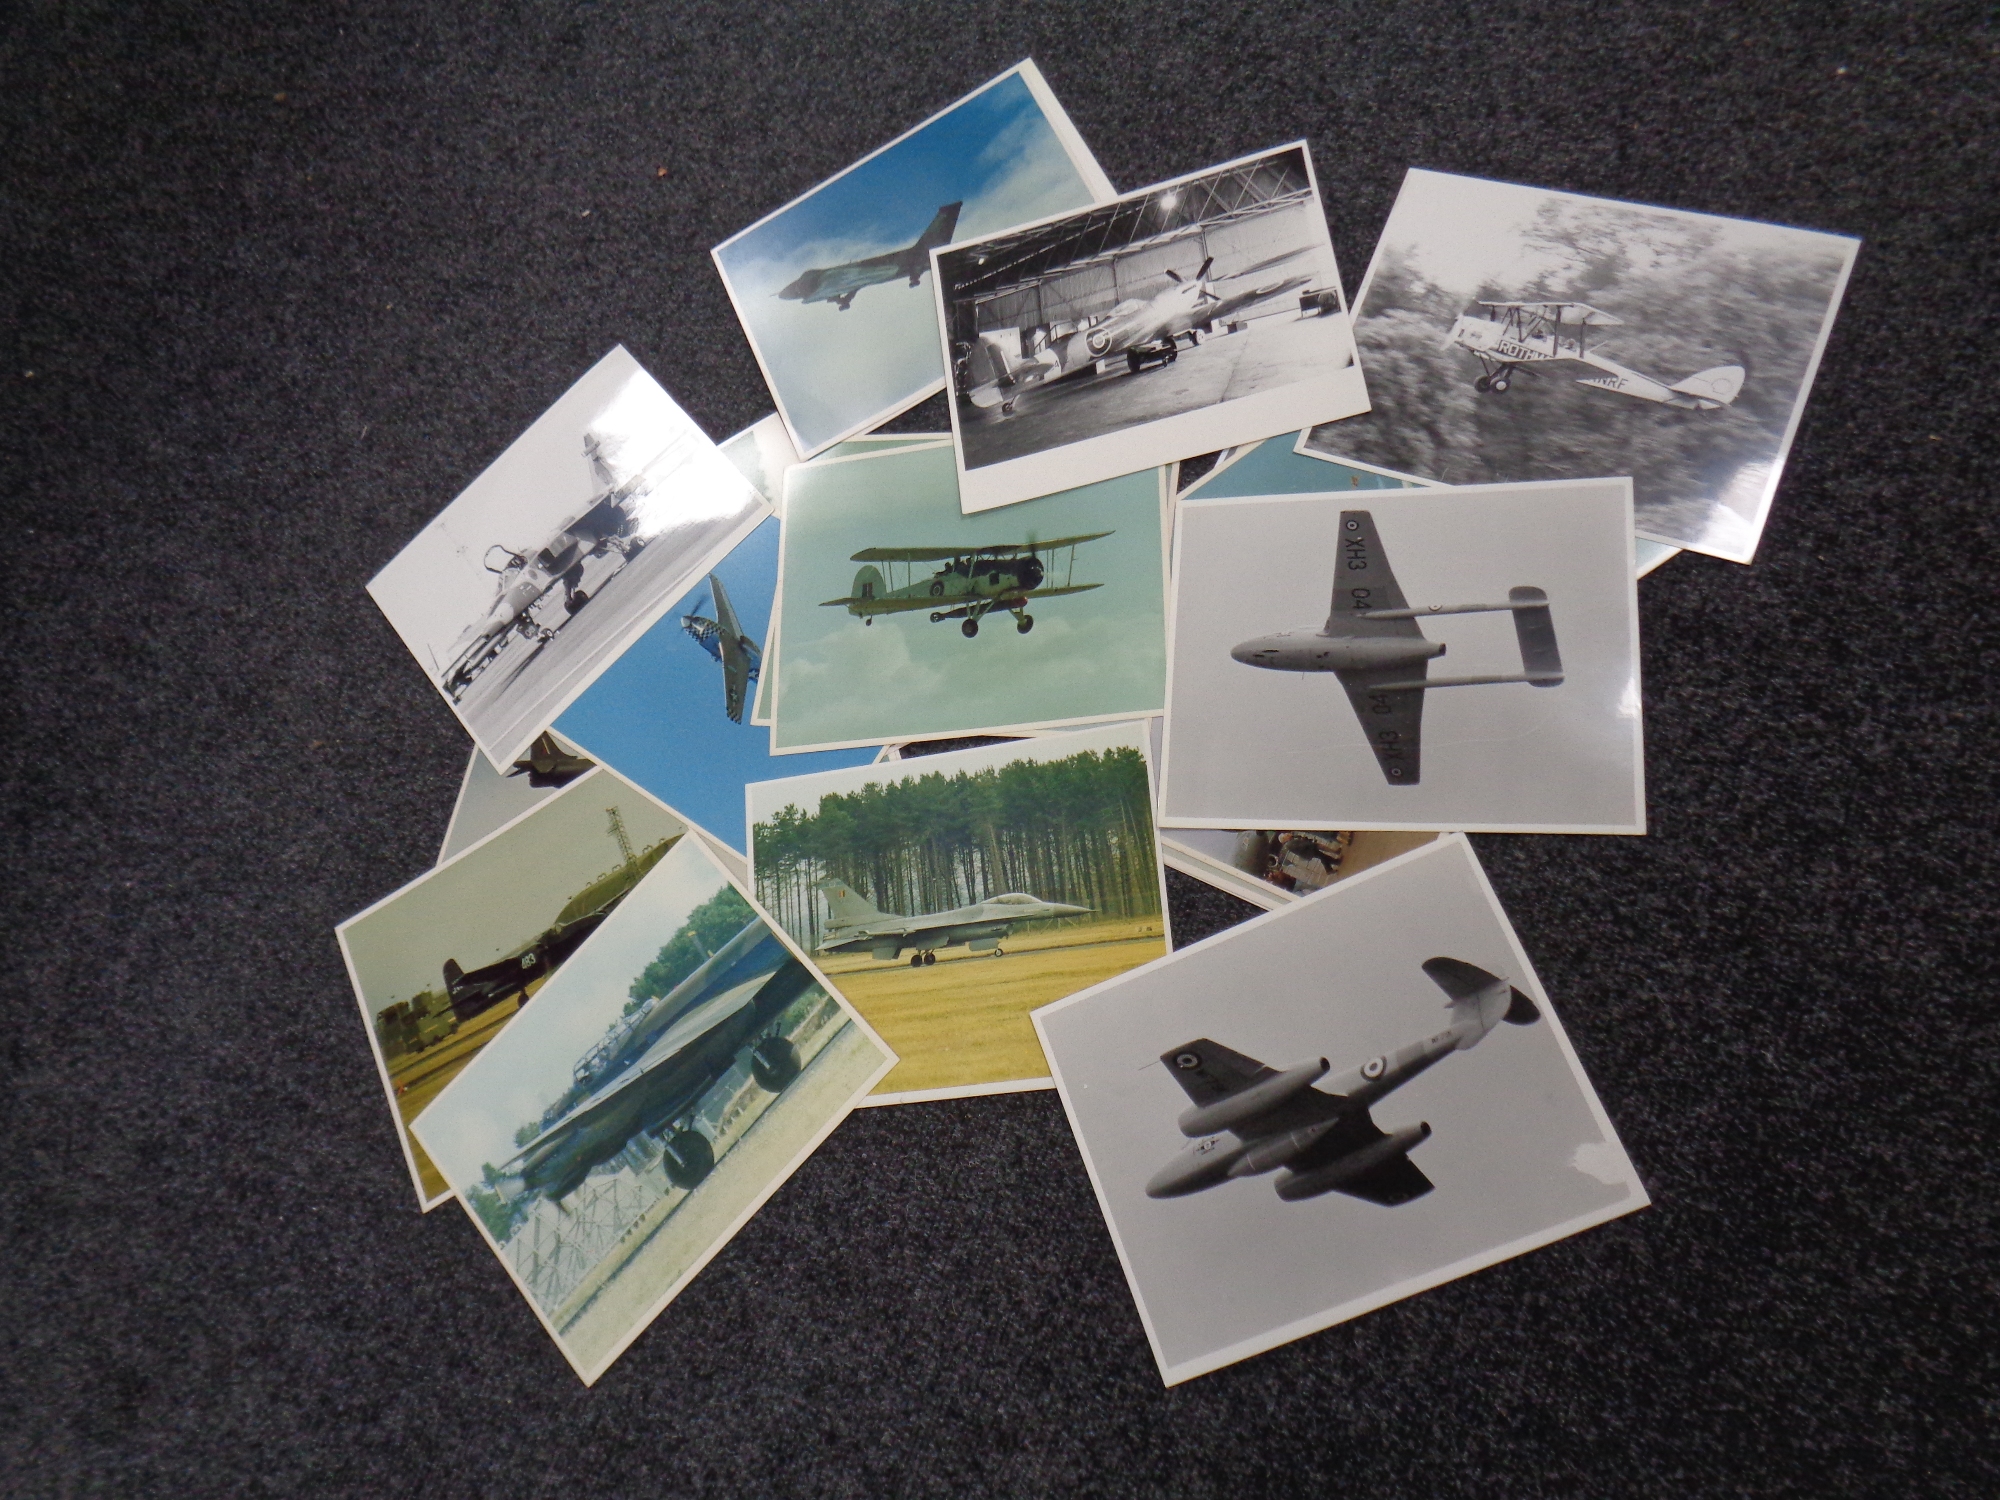 30 photos of war fighter jet planes.